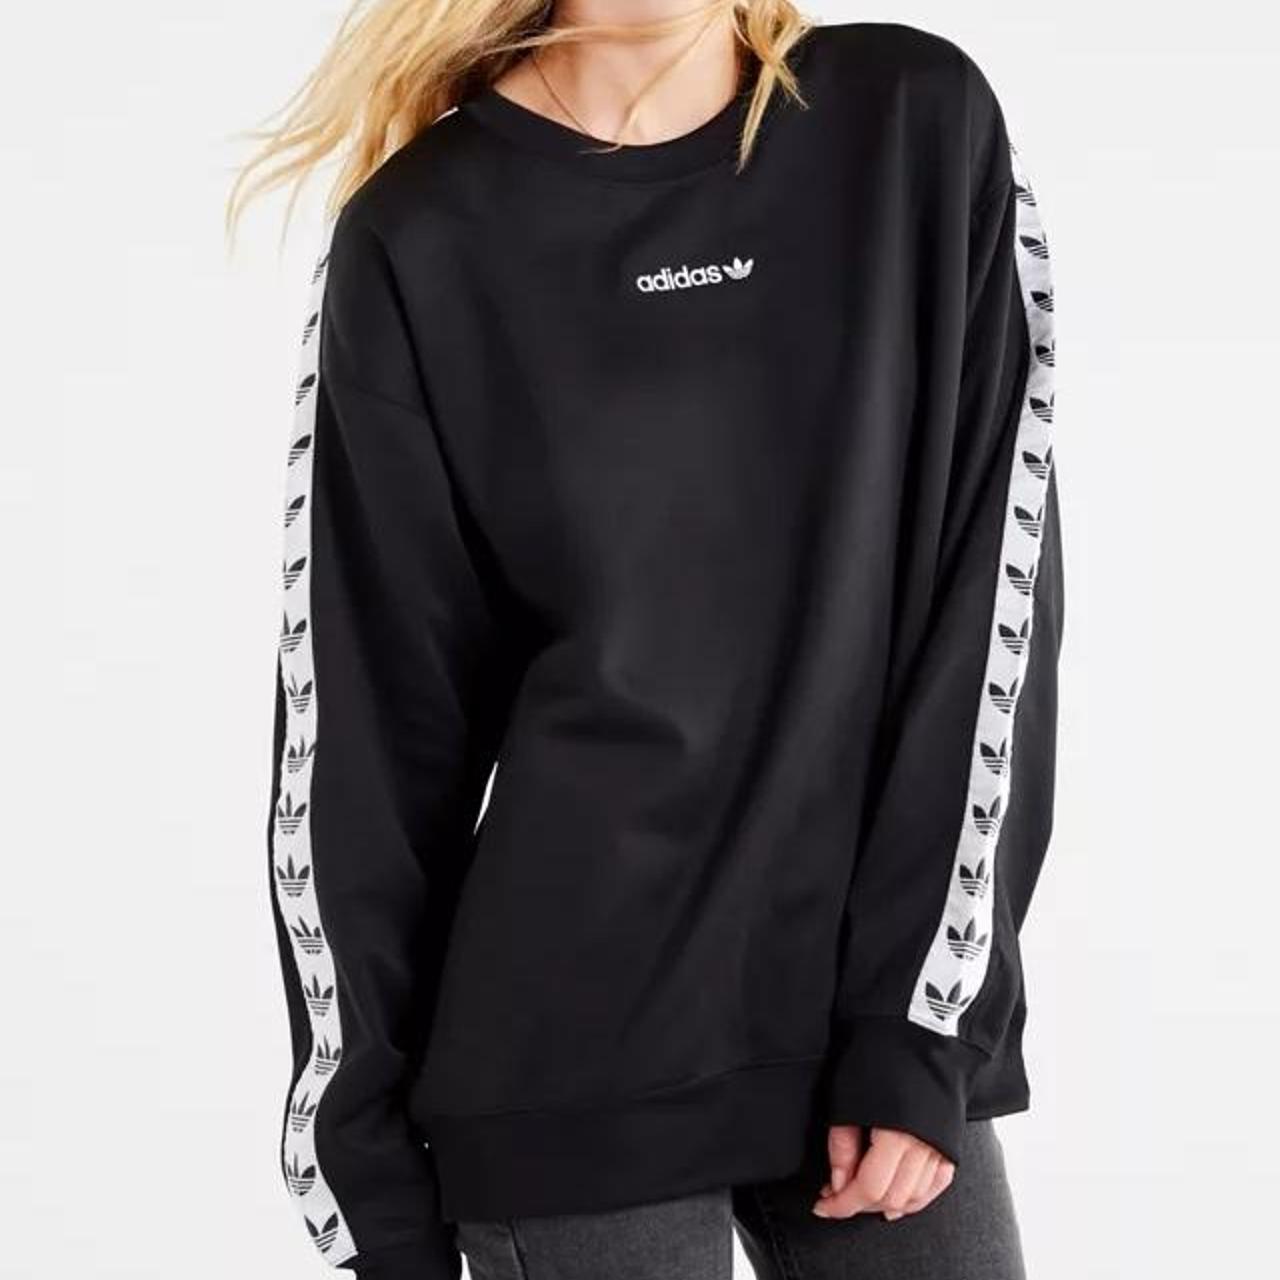 Adidas Originals Taped Crewneck - Depop Sweatshirt Size